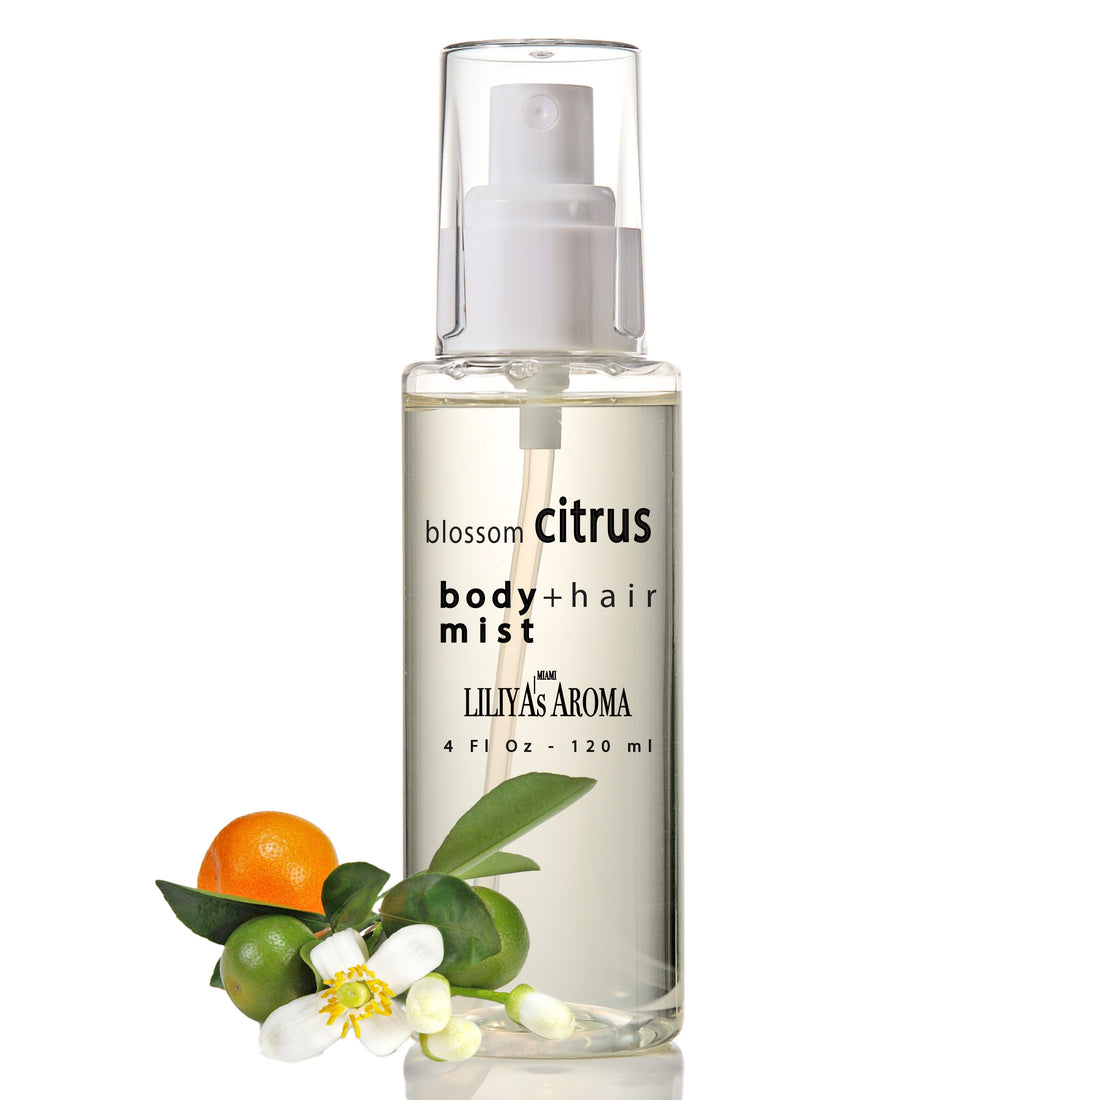 Liliya’s Aroma Blossom Citrus Body Spray for Women and Men, Gourmand Fragrance with Neroli Essential Oil 4 Fl Oz